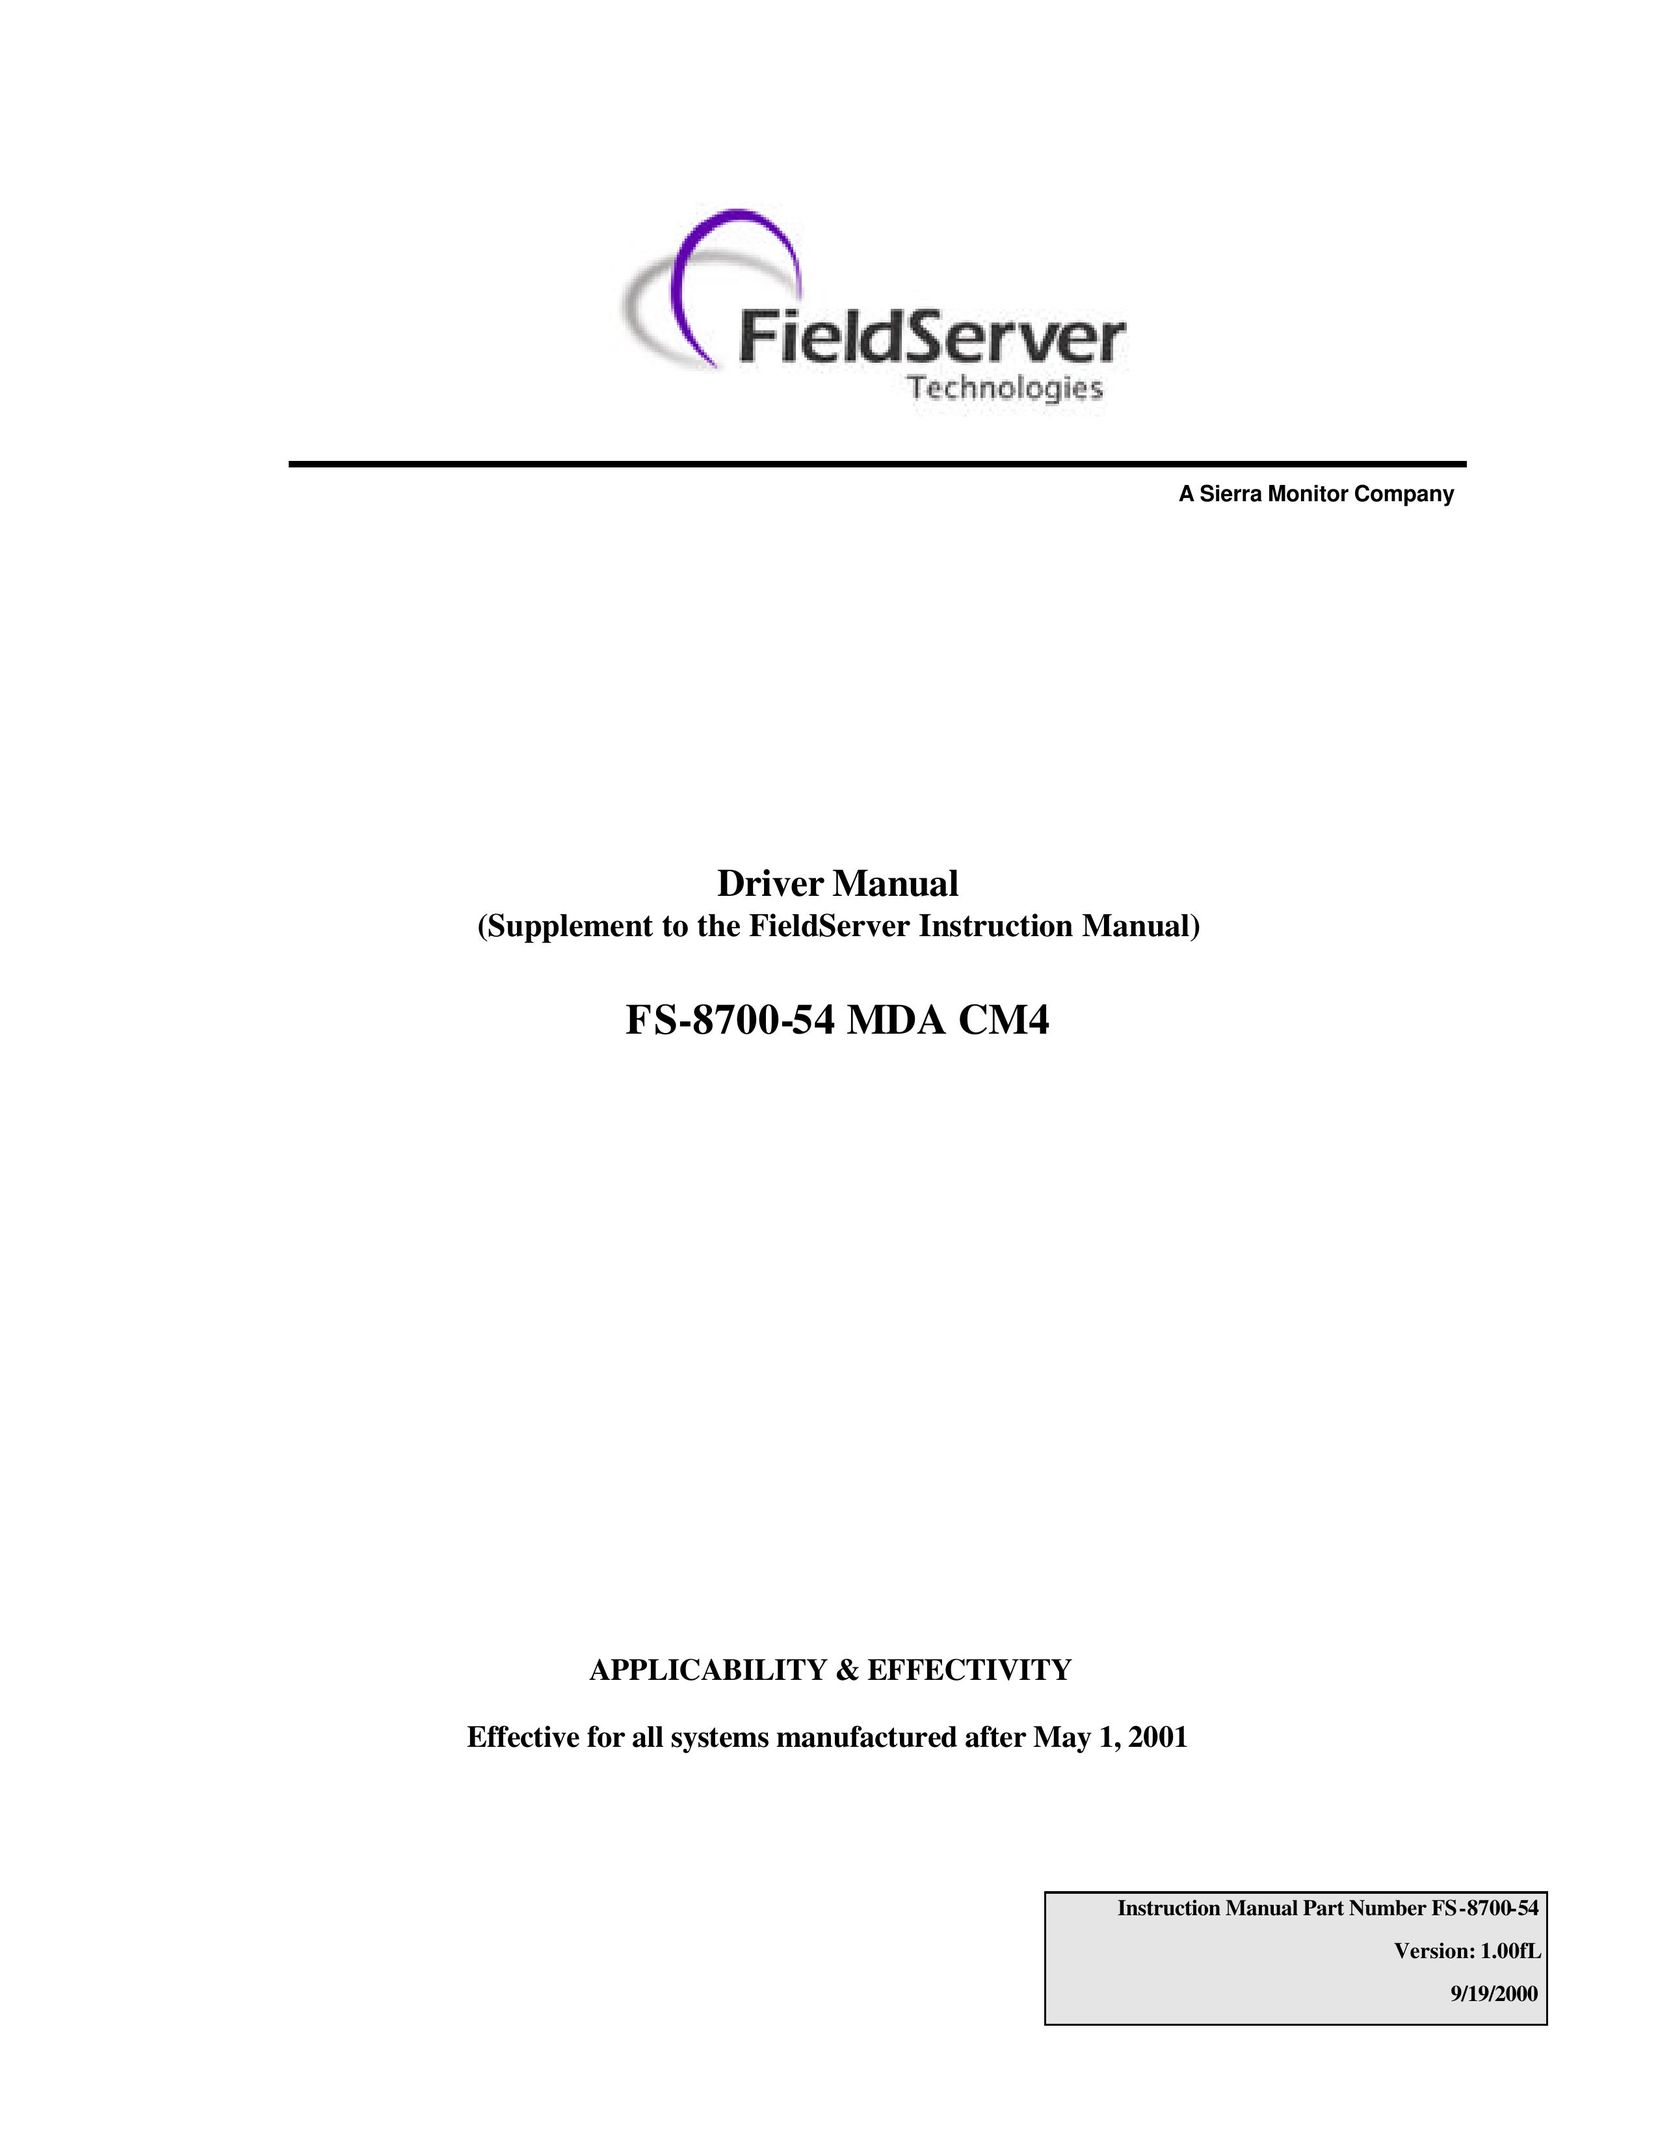 FieldServer FS-8700-54 Computer Drive User Manual